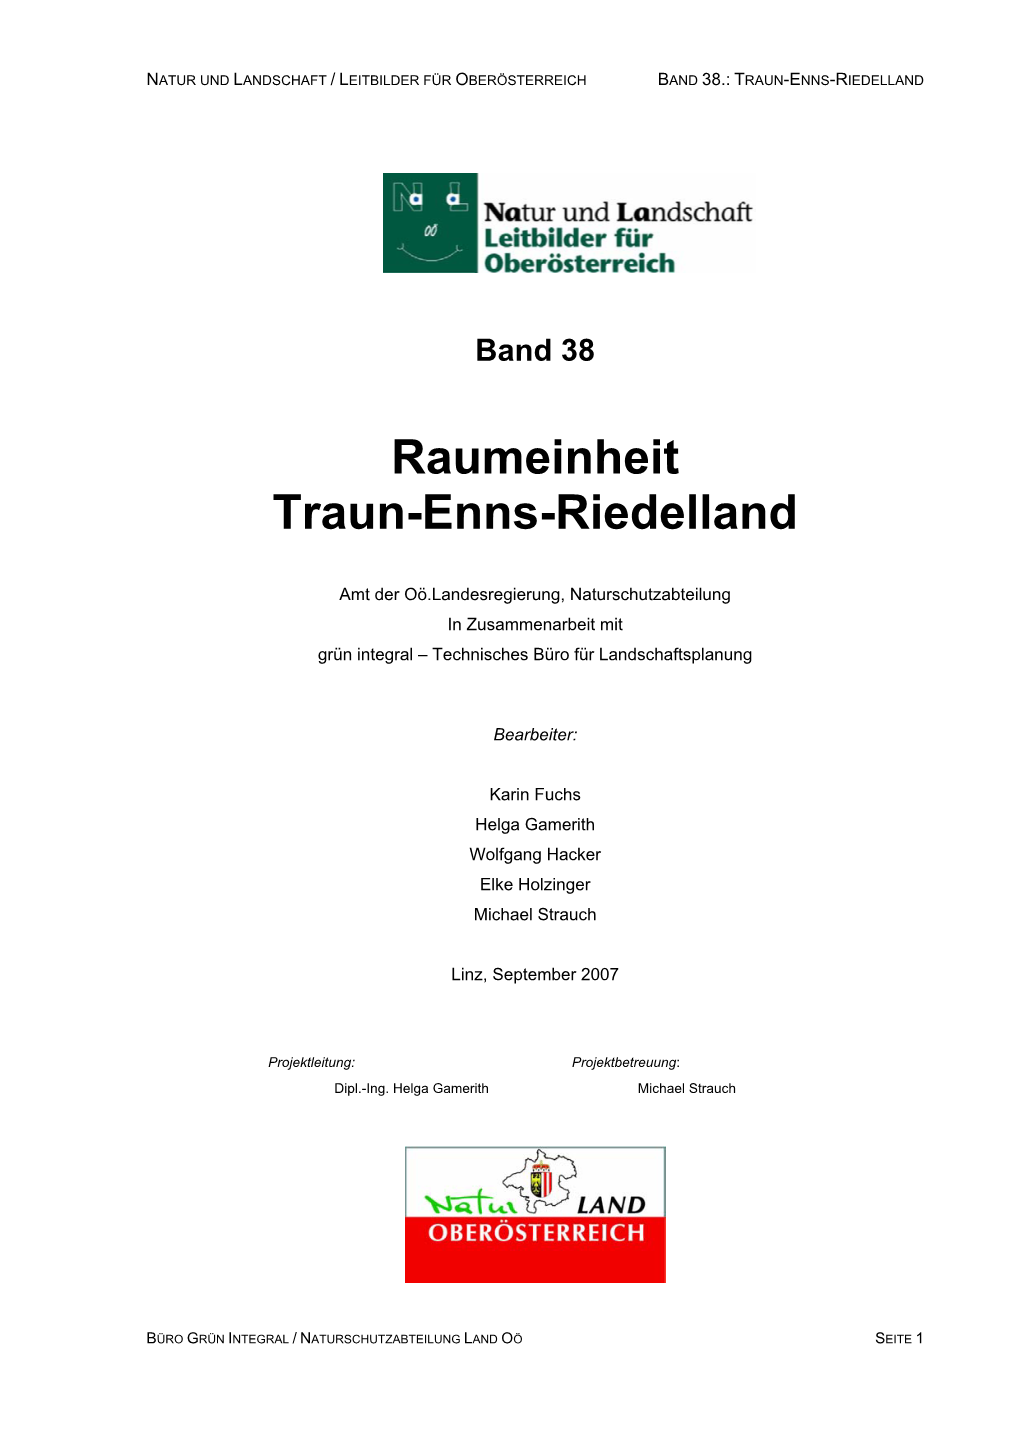 Raumeinheit Traun-Enns-Riedelland